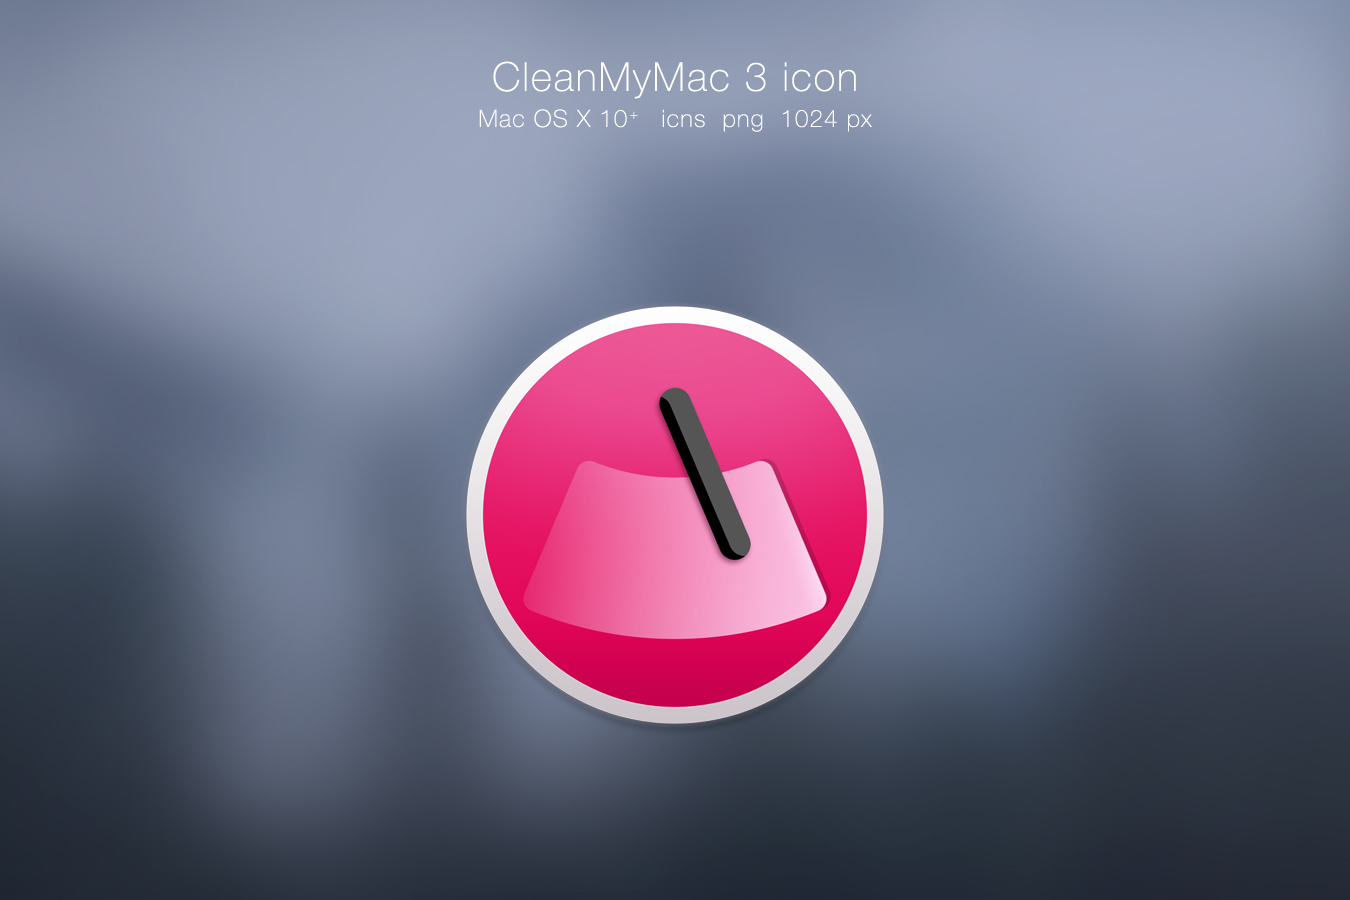 cleanmymac 3 mac torrent